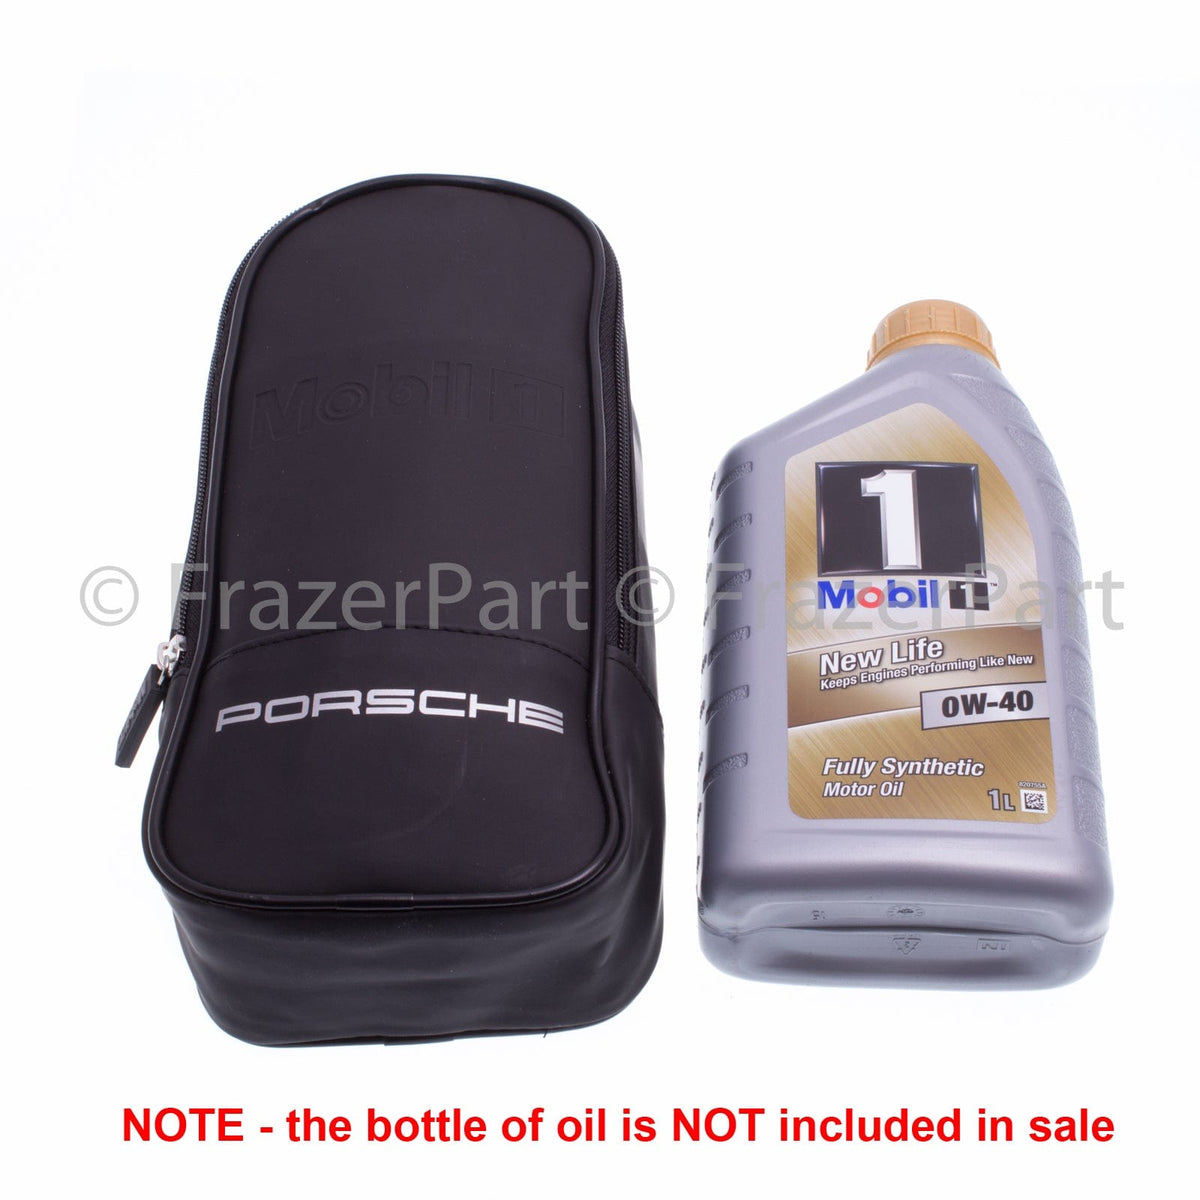 Porsche Mobil Oil Kit de recarga de aceite y bolsa de almacenamiento de 1 litro